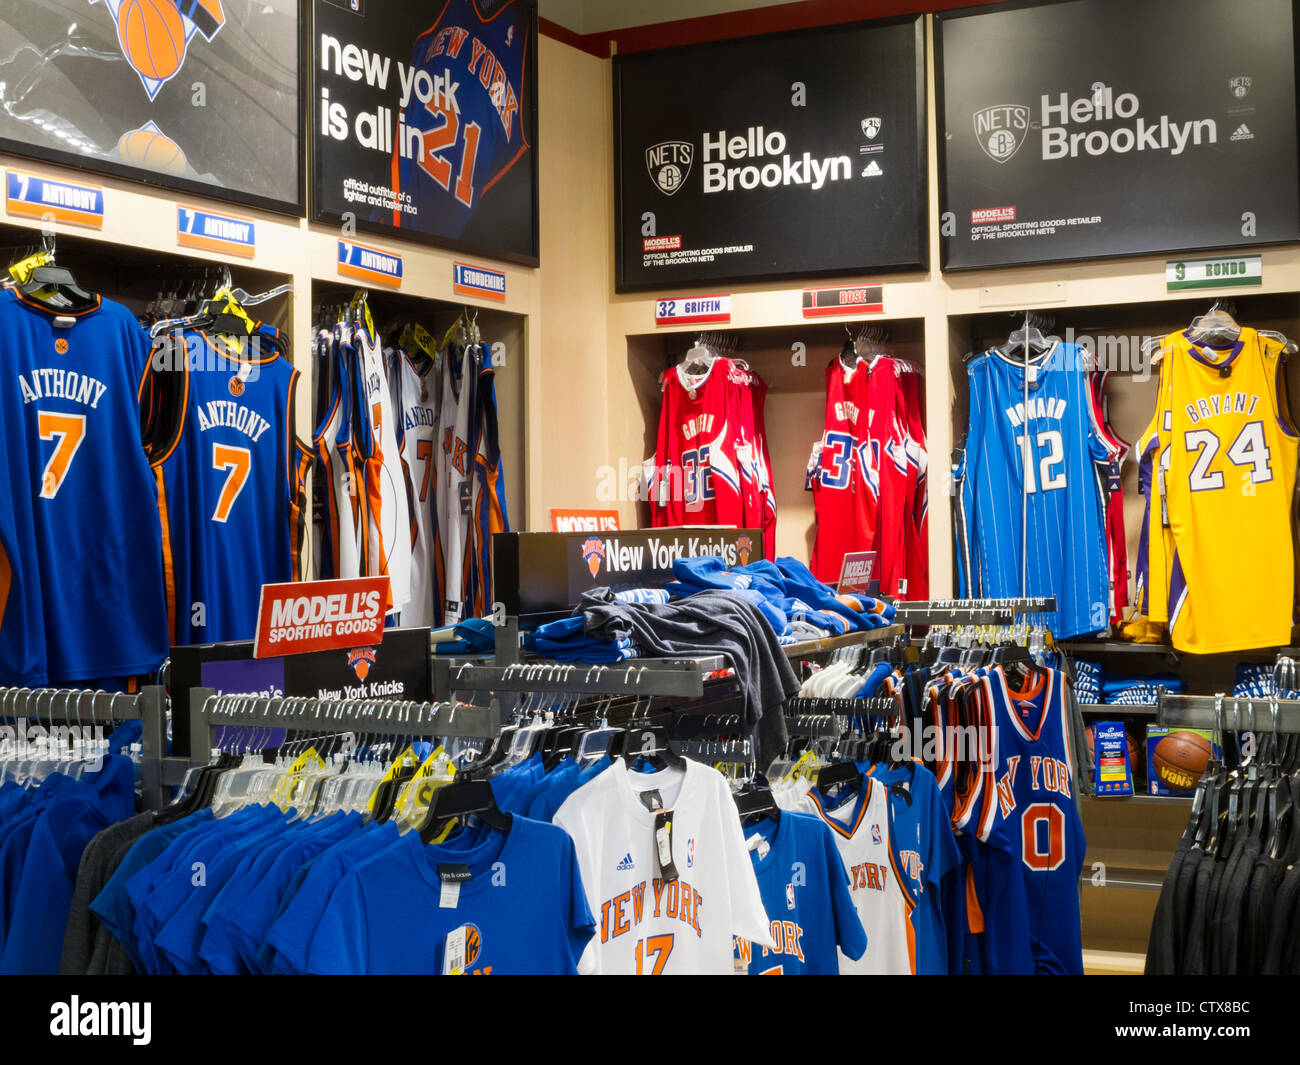 NBA Jerseys, Modell\'s Sporting Goods Store Interior, NYC Stock Photo ...